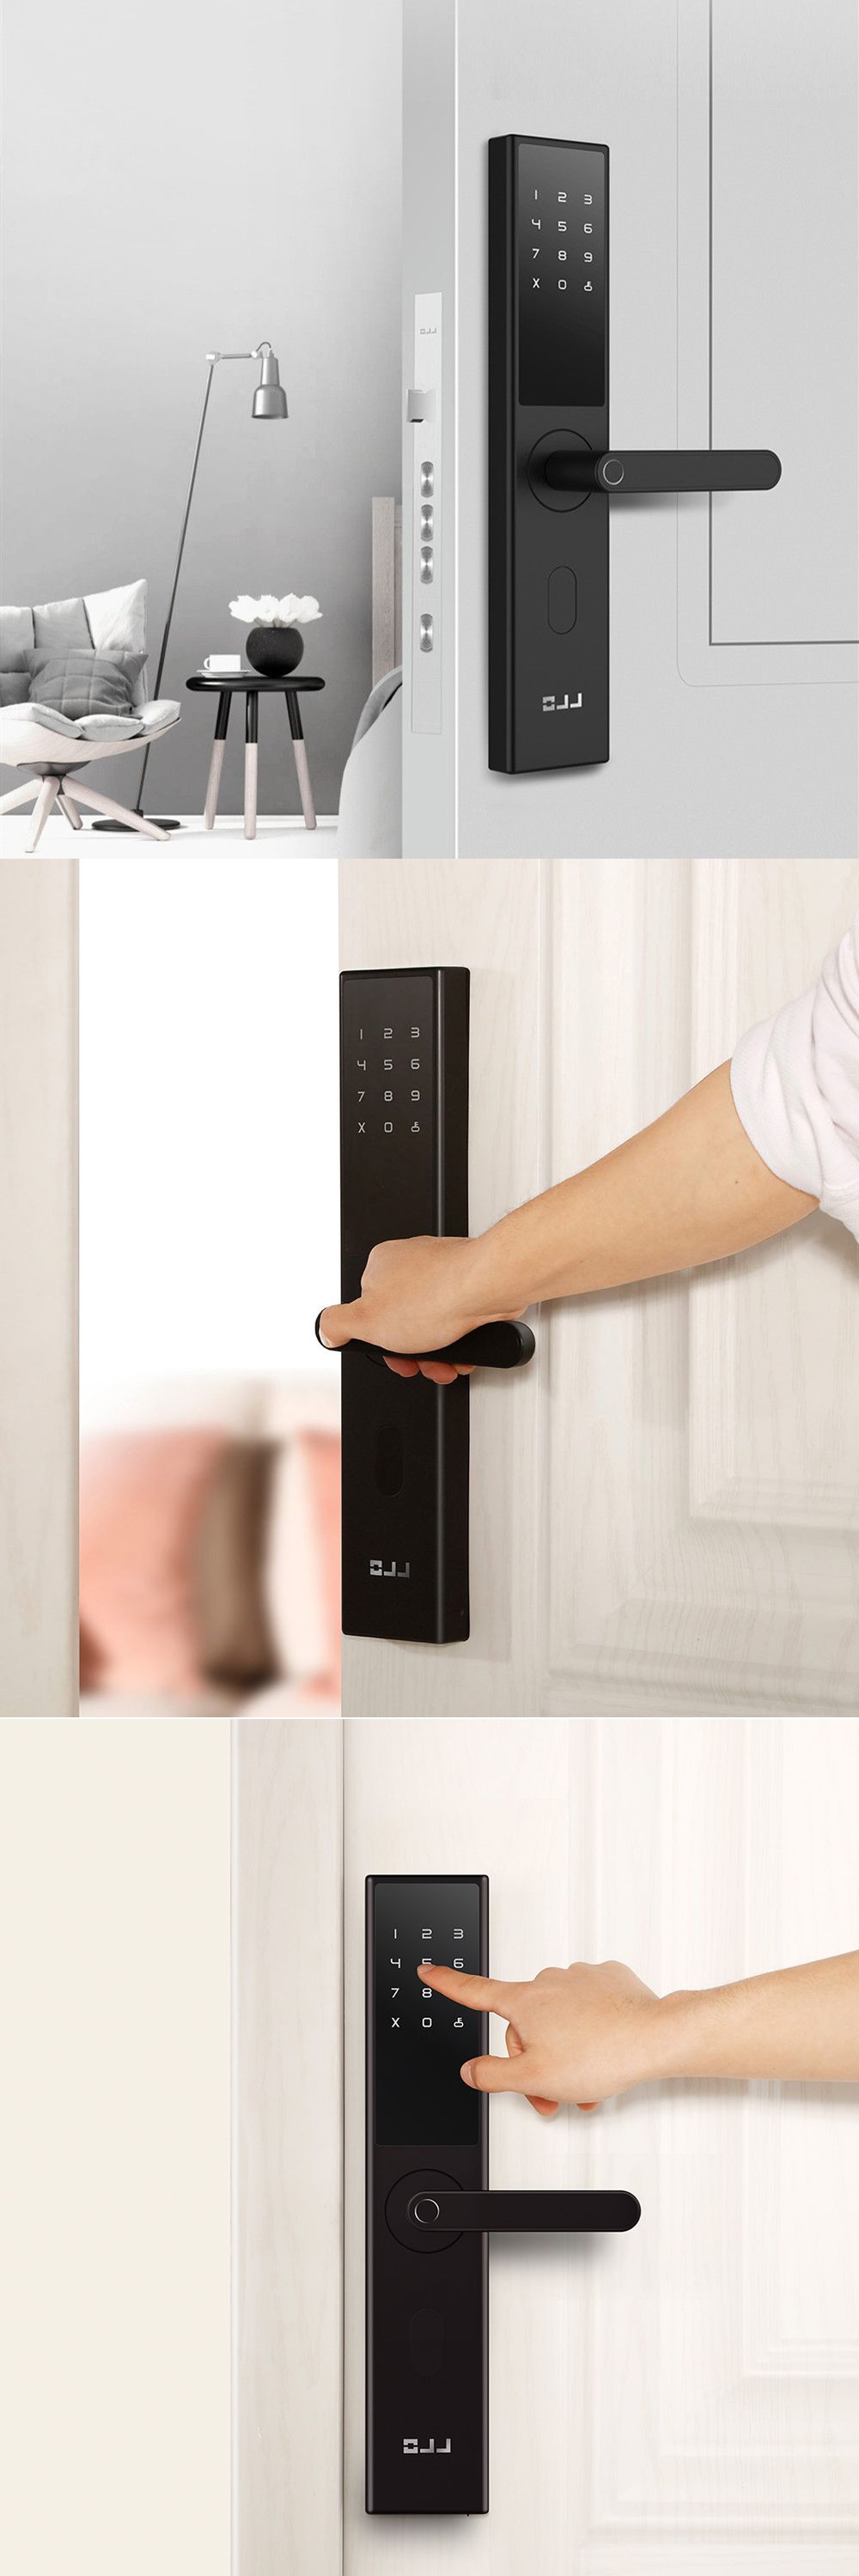 OJJ-X1-Smart-Door-Lock-Mortise-Lock-Intelligent-Fingerprint-Password-Key-bluetooth-Security-Works-Wi-1524880